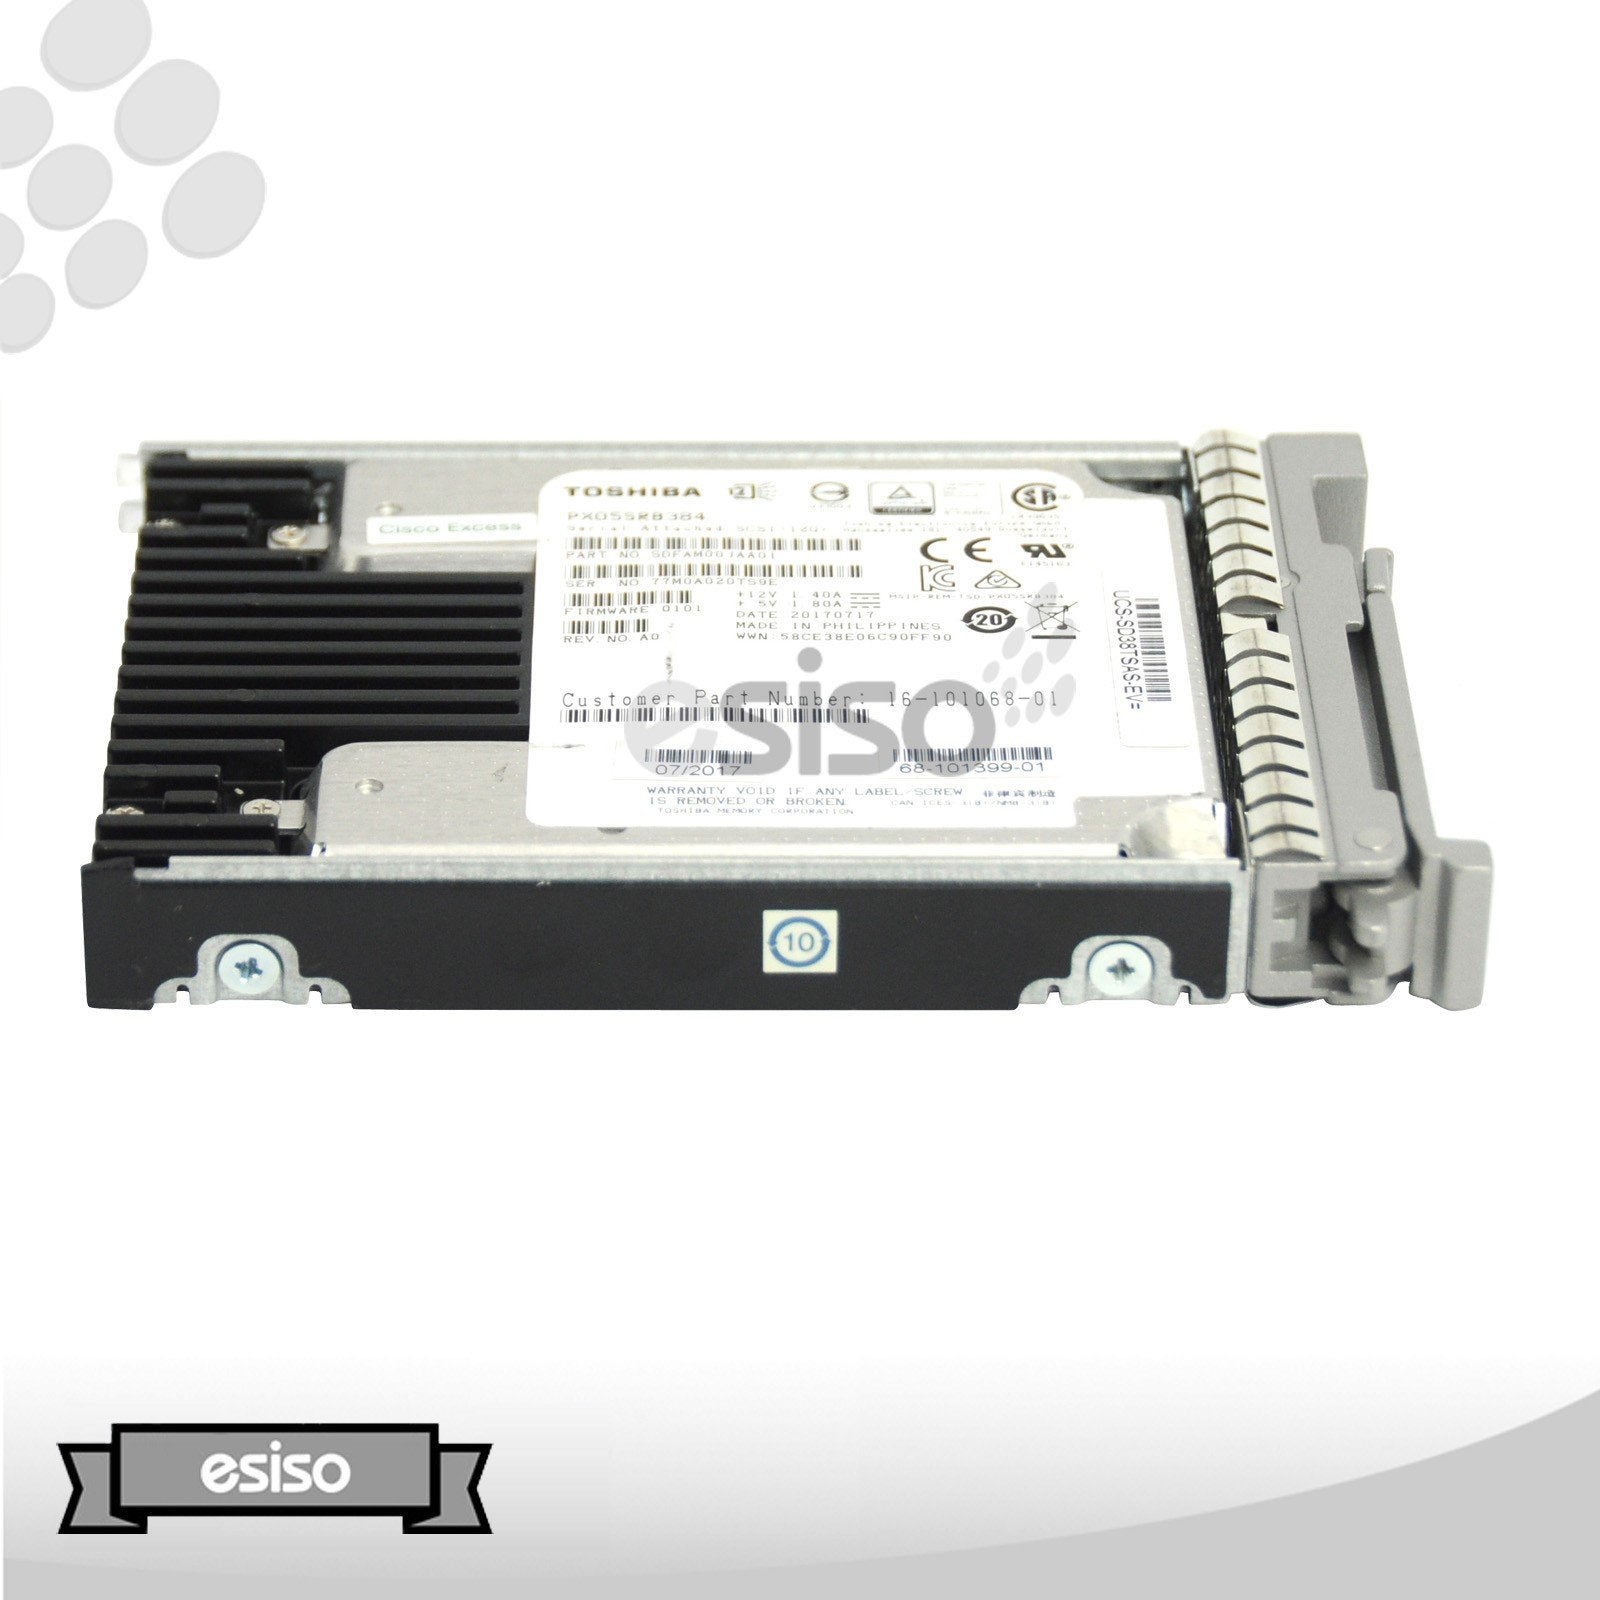 UCS-SD38TSAS-EV PX05SRB384 CISCO ENTERPISE VALUE 3.84TB 12G SFF 2.5" SAS SSD